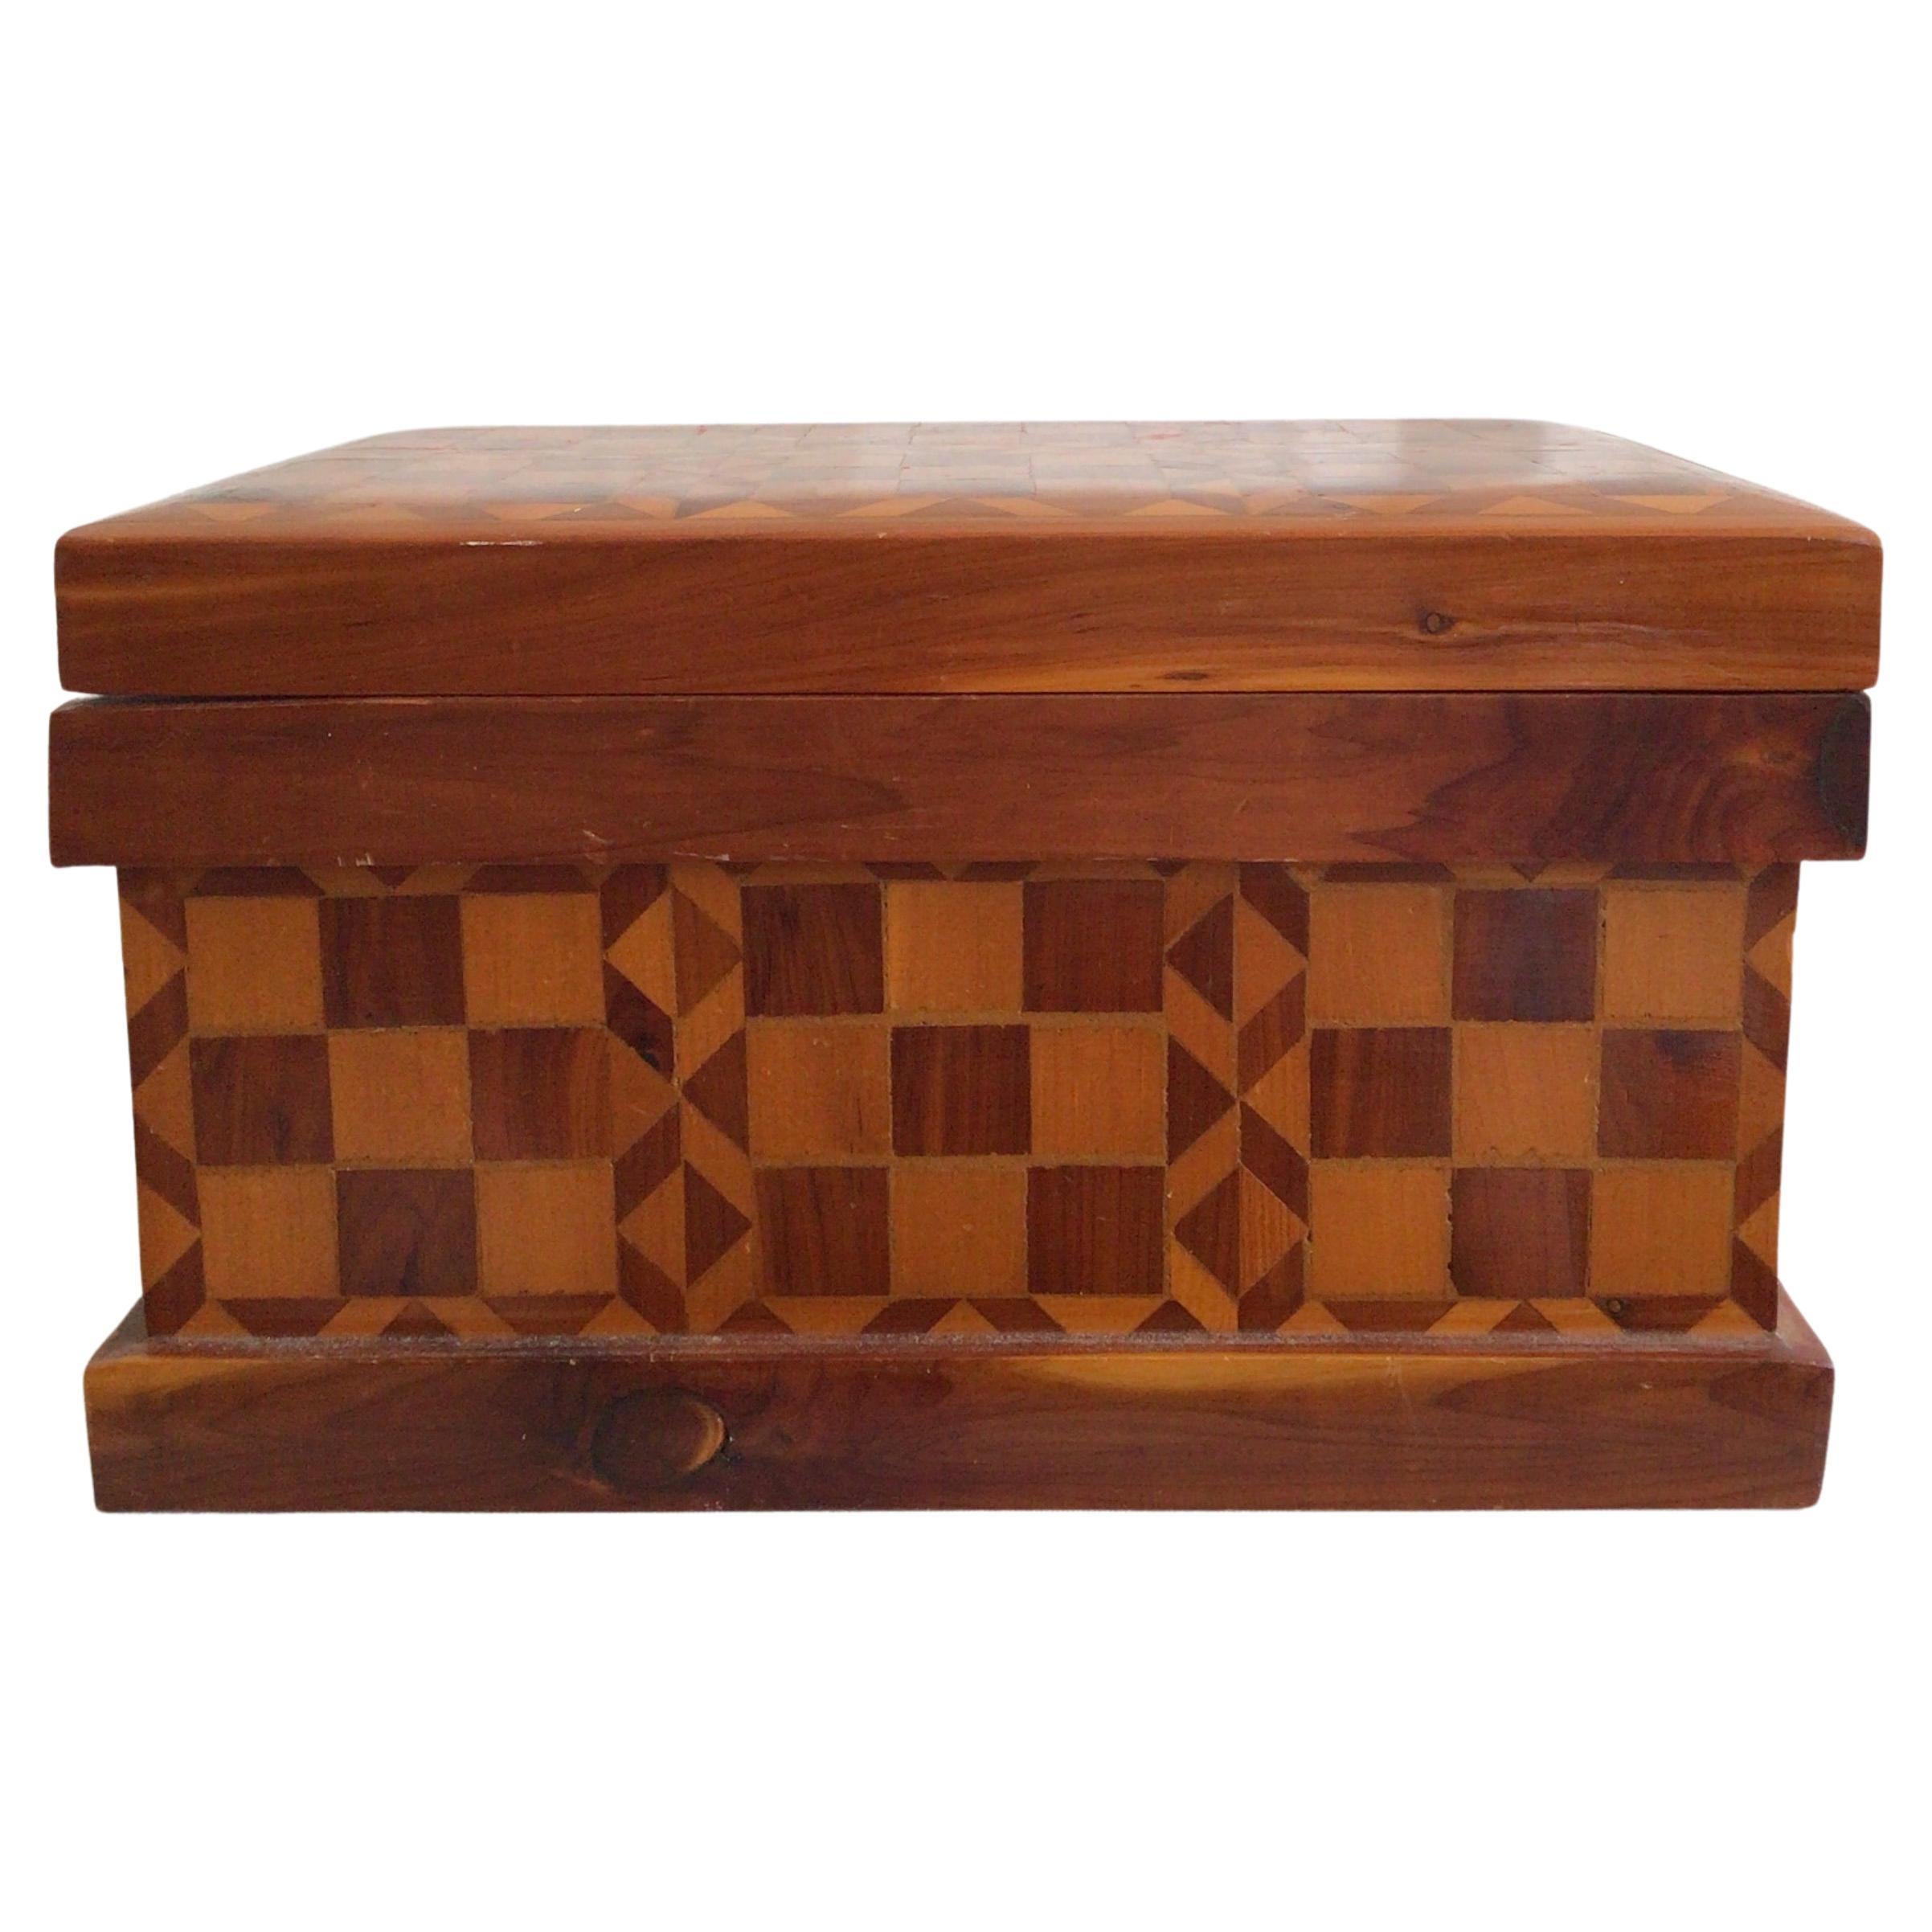 https://a.1stdibscdn.com/1940s-handmade-folk-art-checkered-inlayed-box-for-sale/f_10782/f_354486421690575780754/f_35448642_1690575781745_bg_processed.jpg